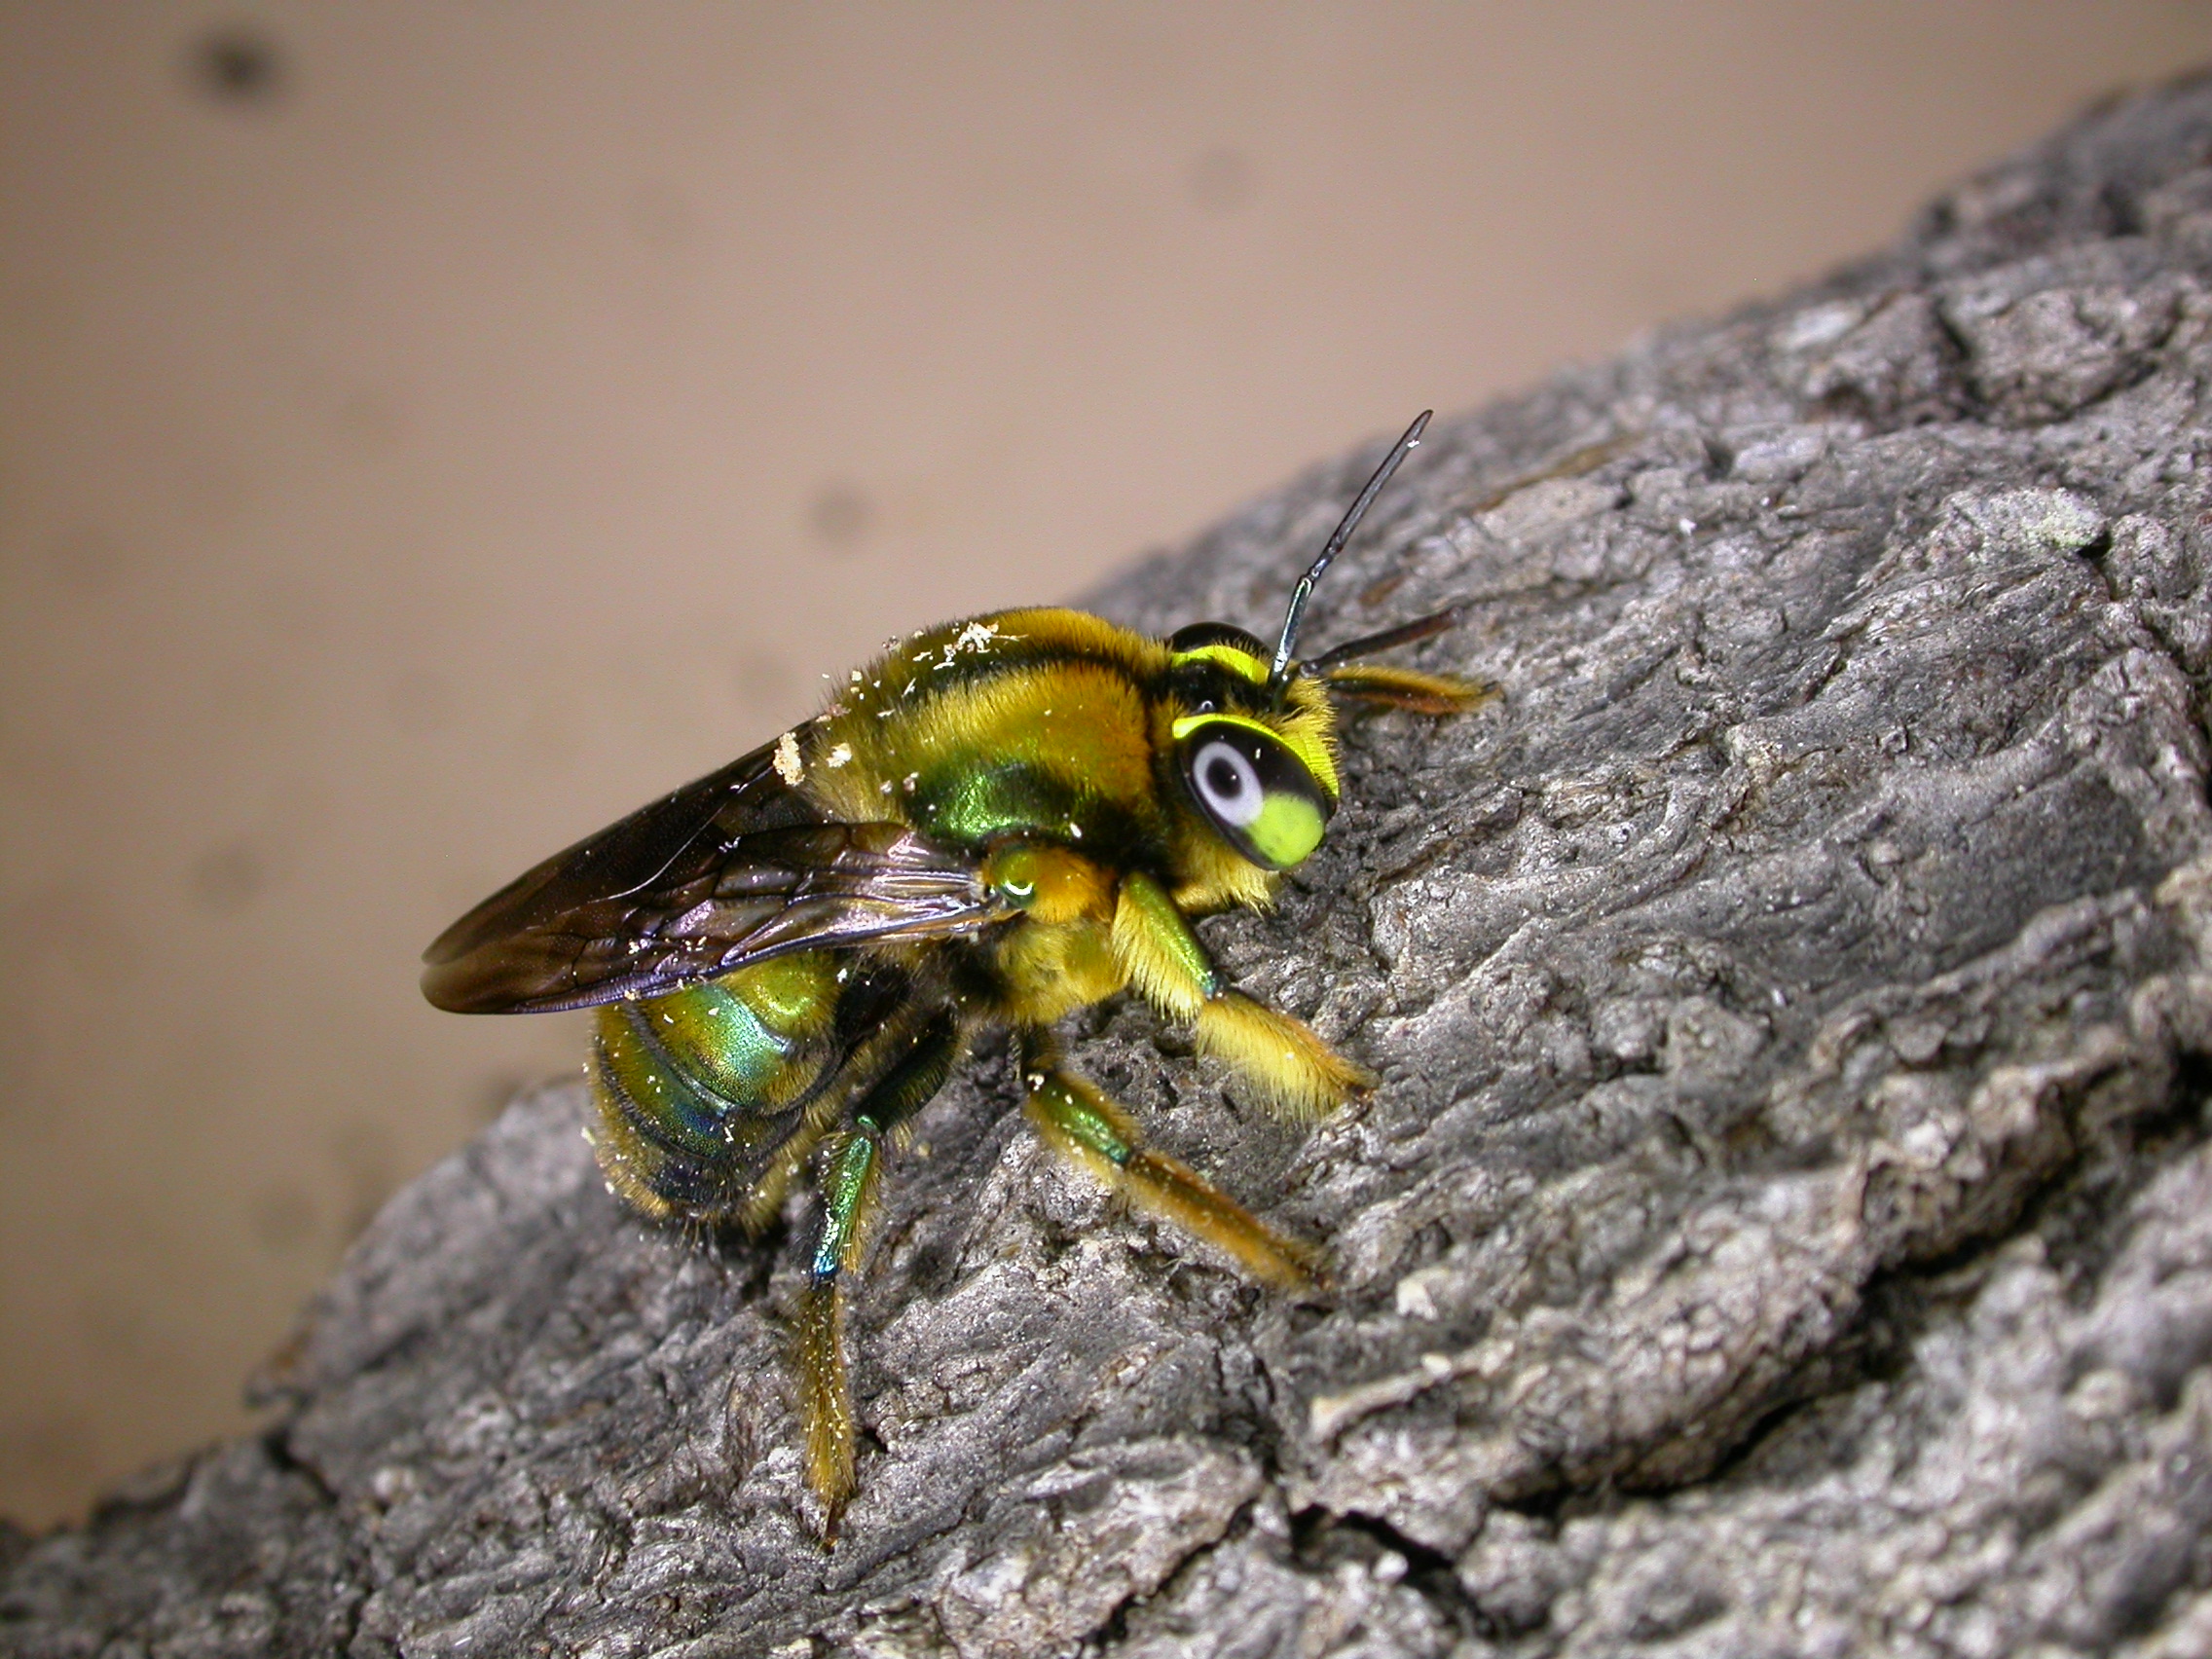 An Australian green carpenter bee resting on a branch. The bee is metallic green.